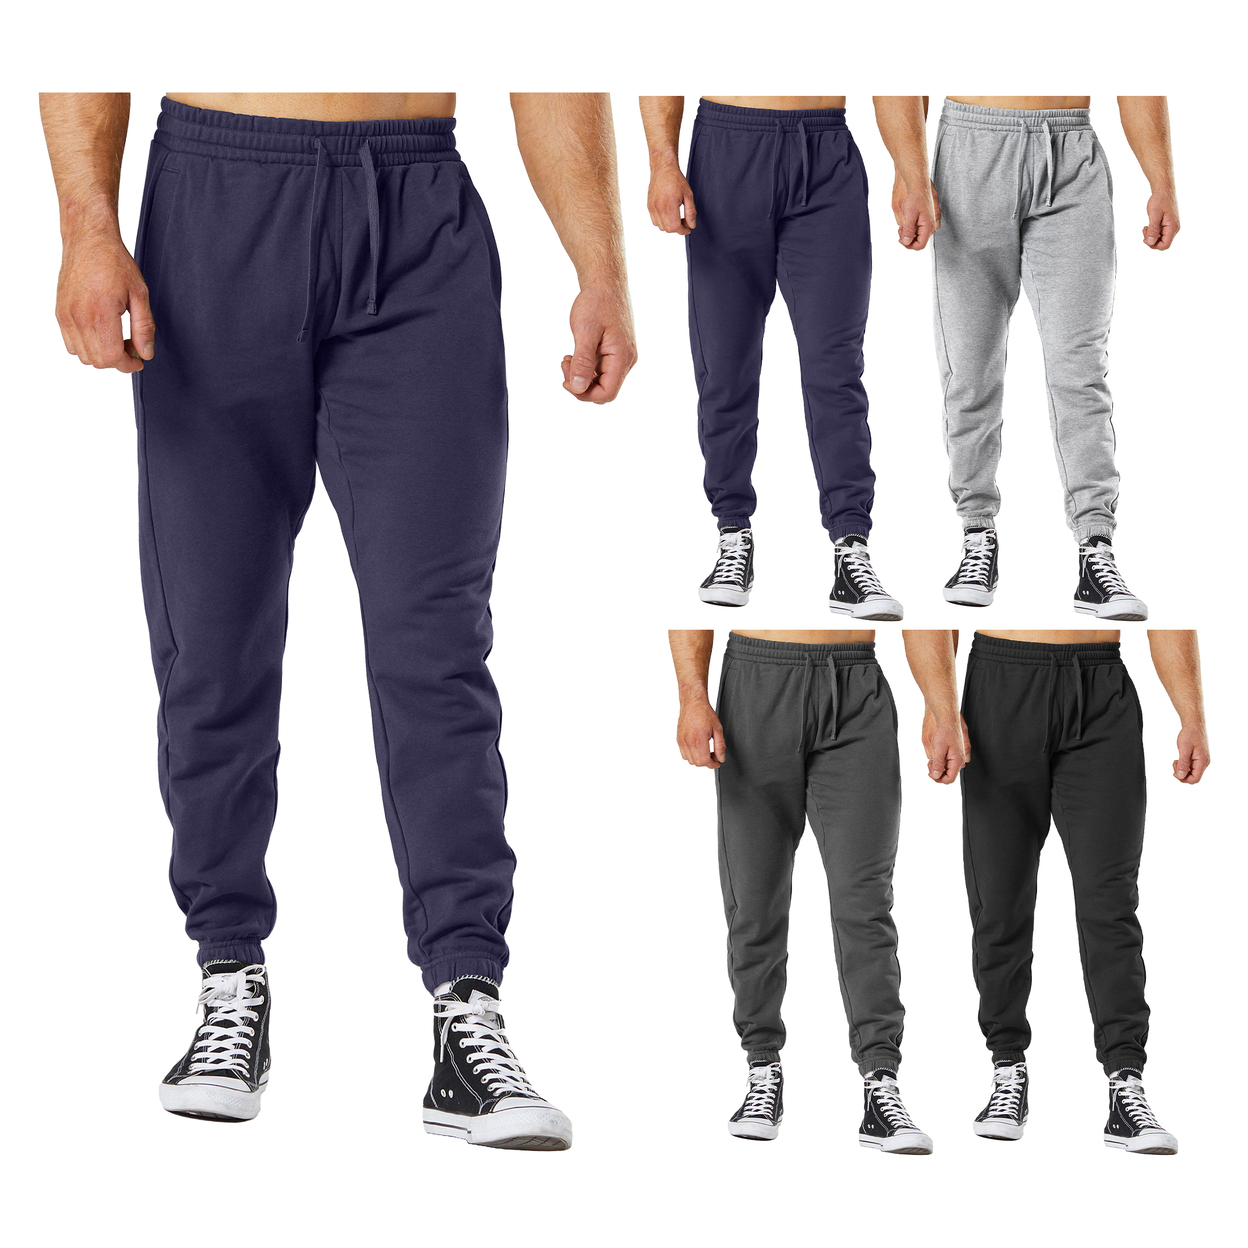 2-Pack: Men's Ultra-Soft Cozy Winter Warm Casual Fleece-Lined Sweatpants Jogger - Black & Black, Small